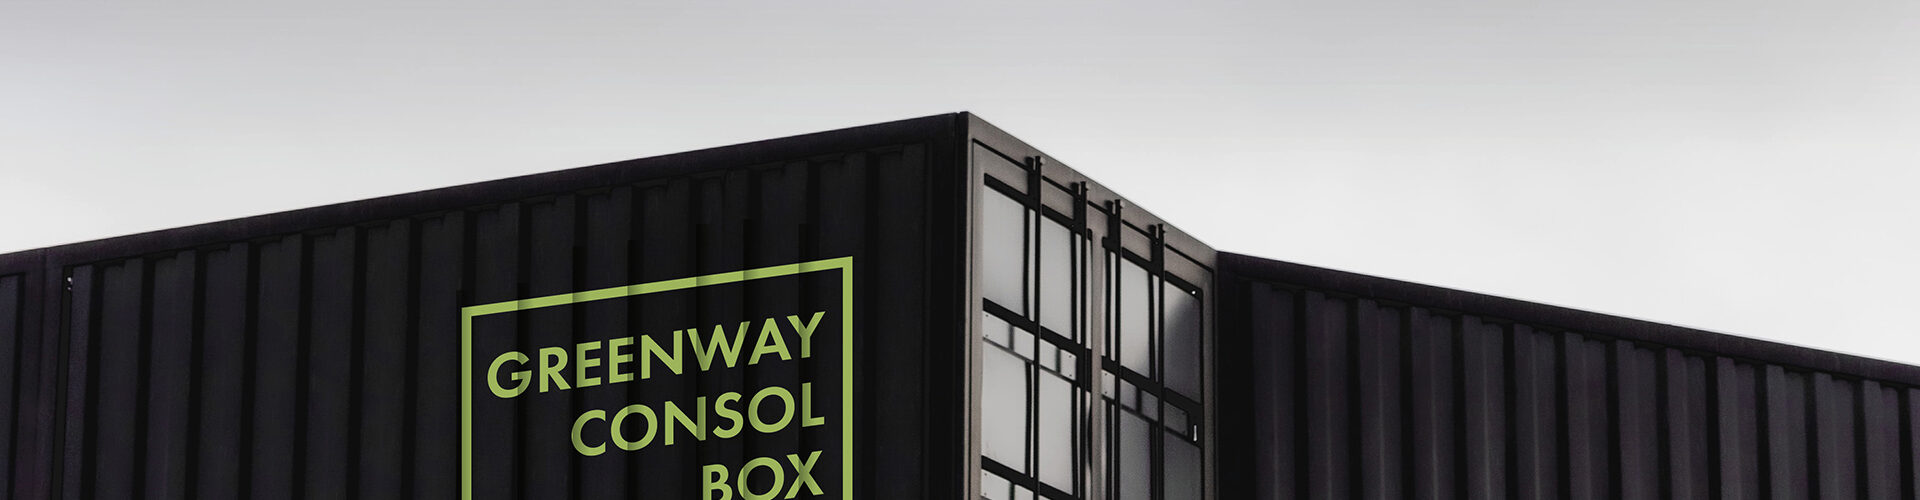 Greenway Consol Box sustainable fashion logistics